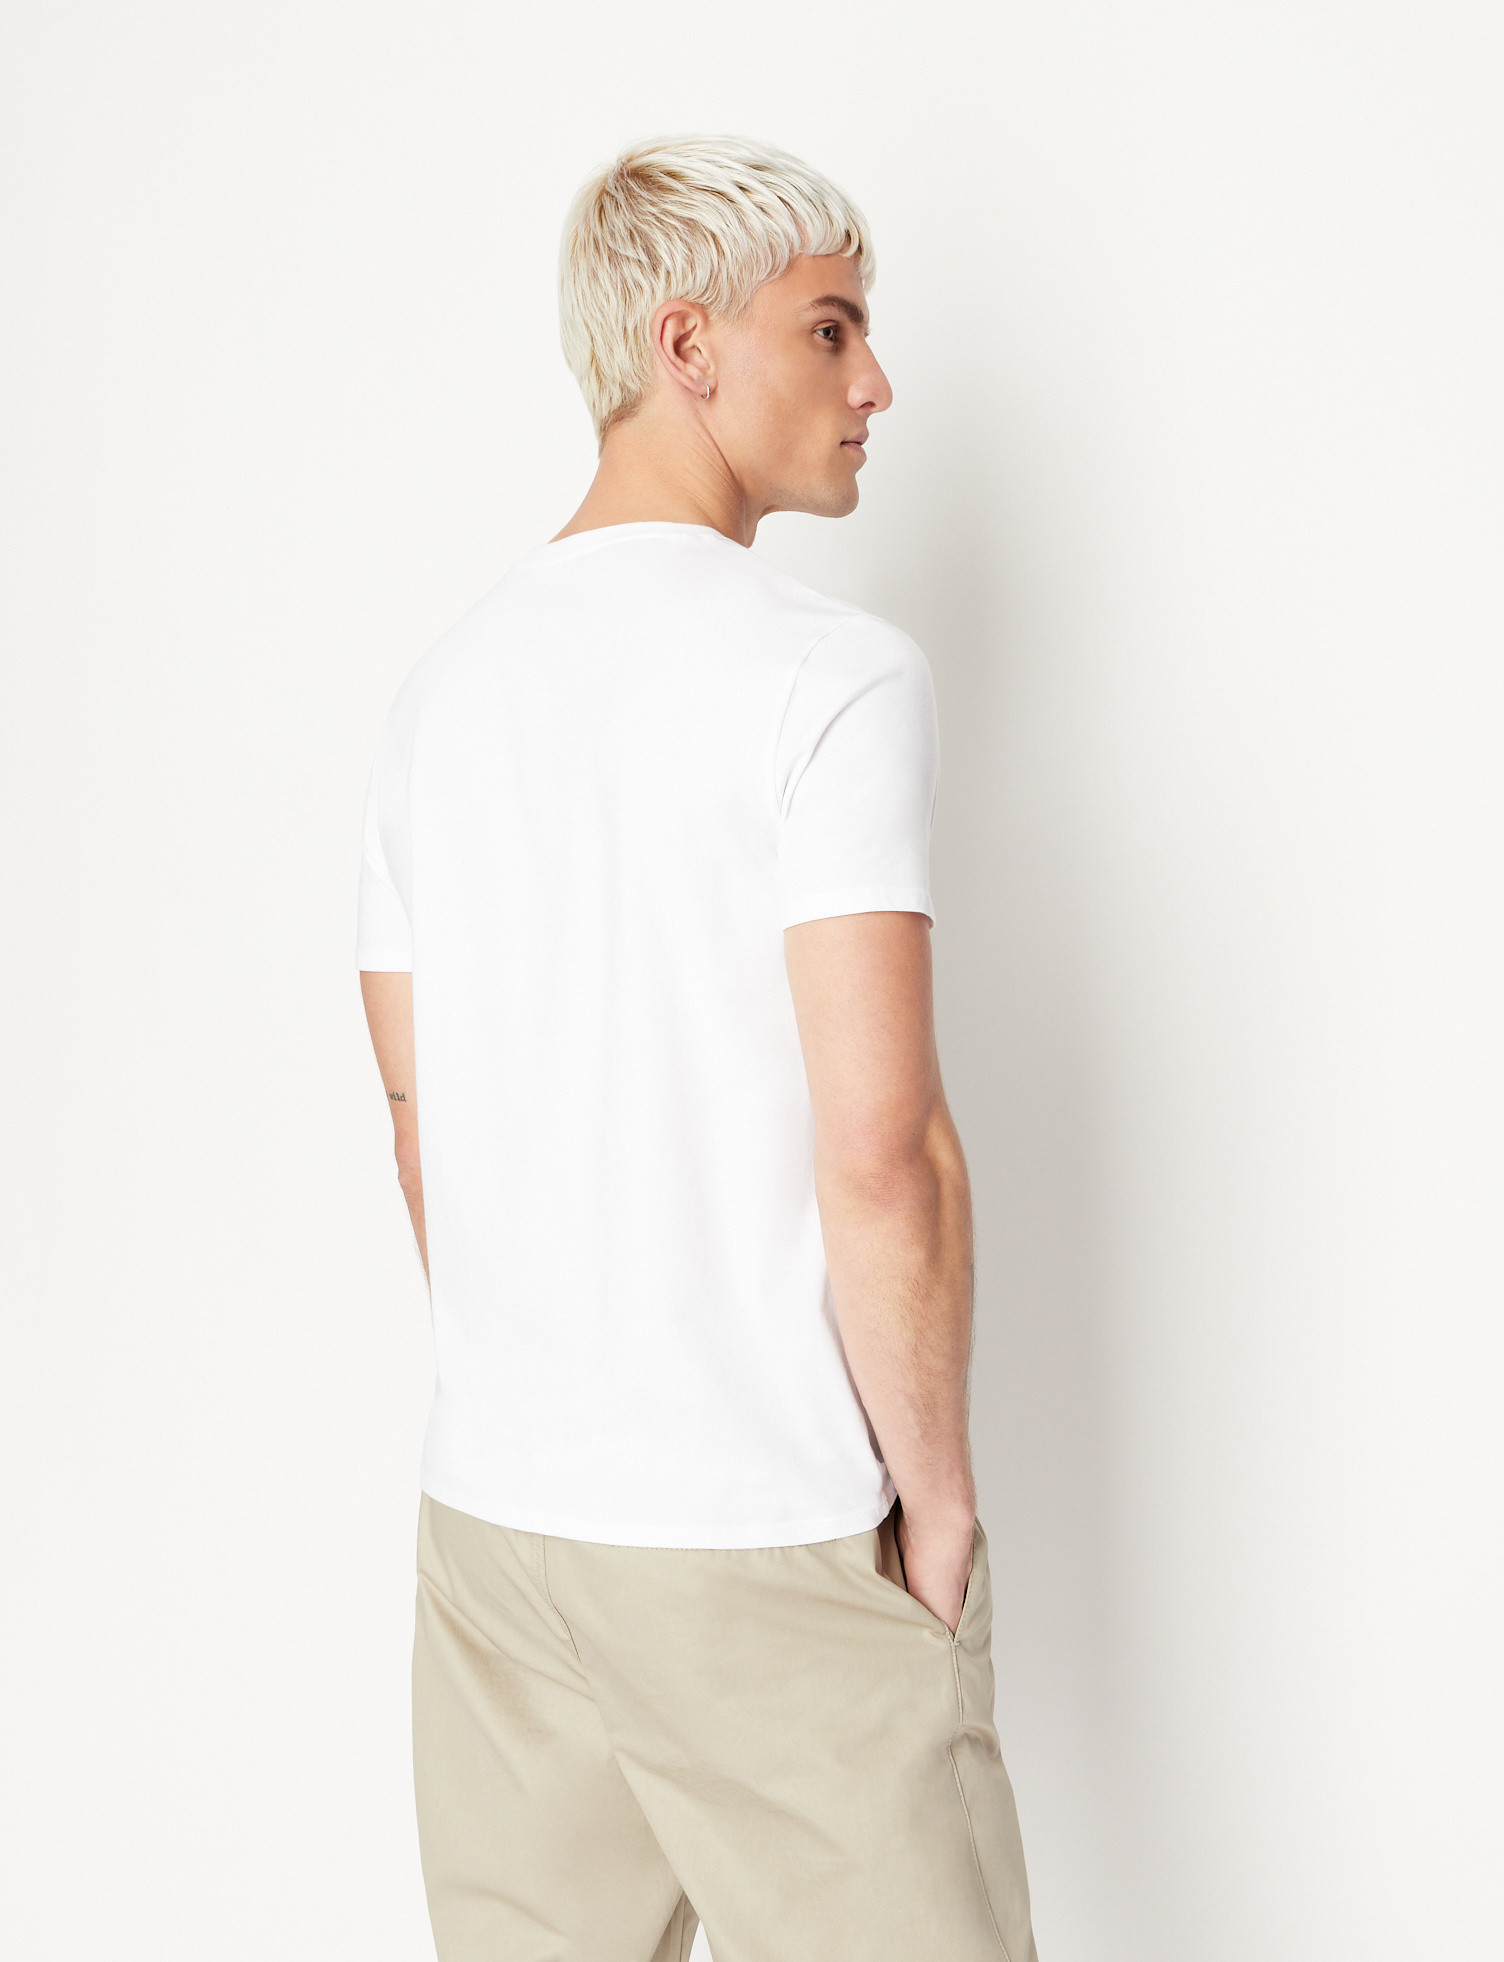 Armani Exchange - T-shirt con stampa slim fit, Bianco, large image number 2